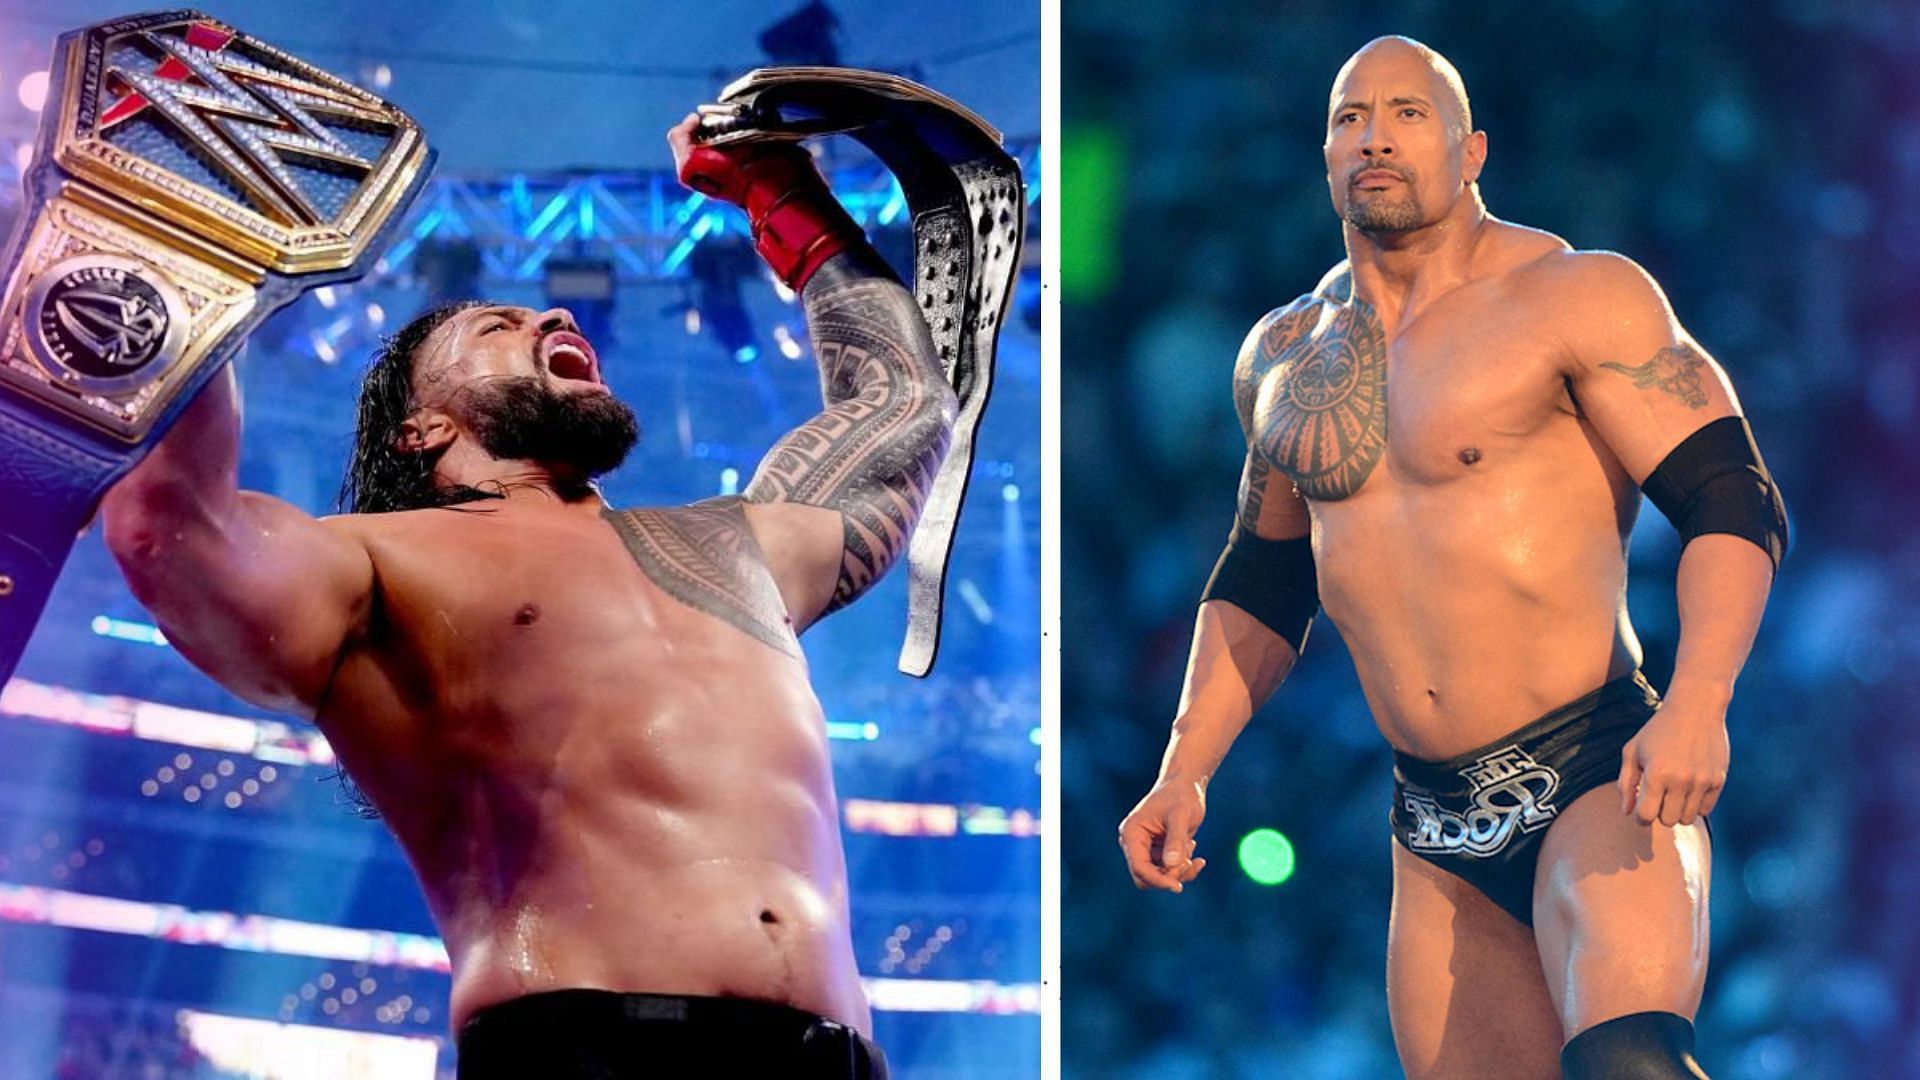 Roman Reigns vs. The Rock at WrestleMania